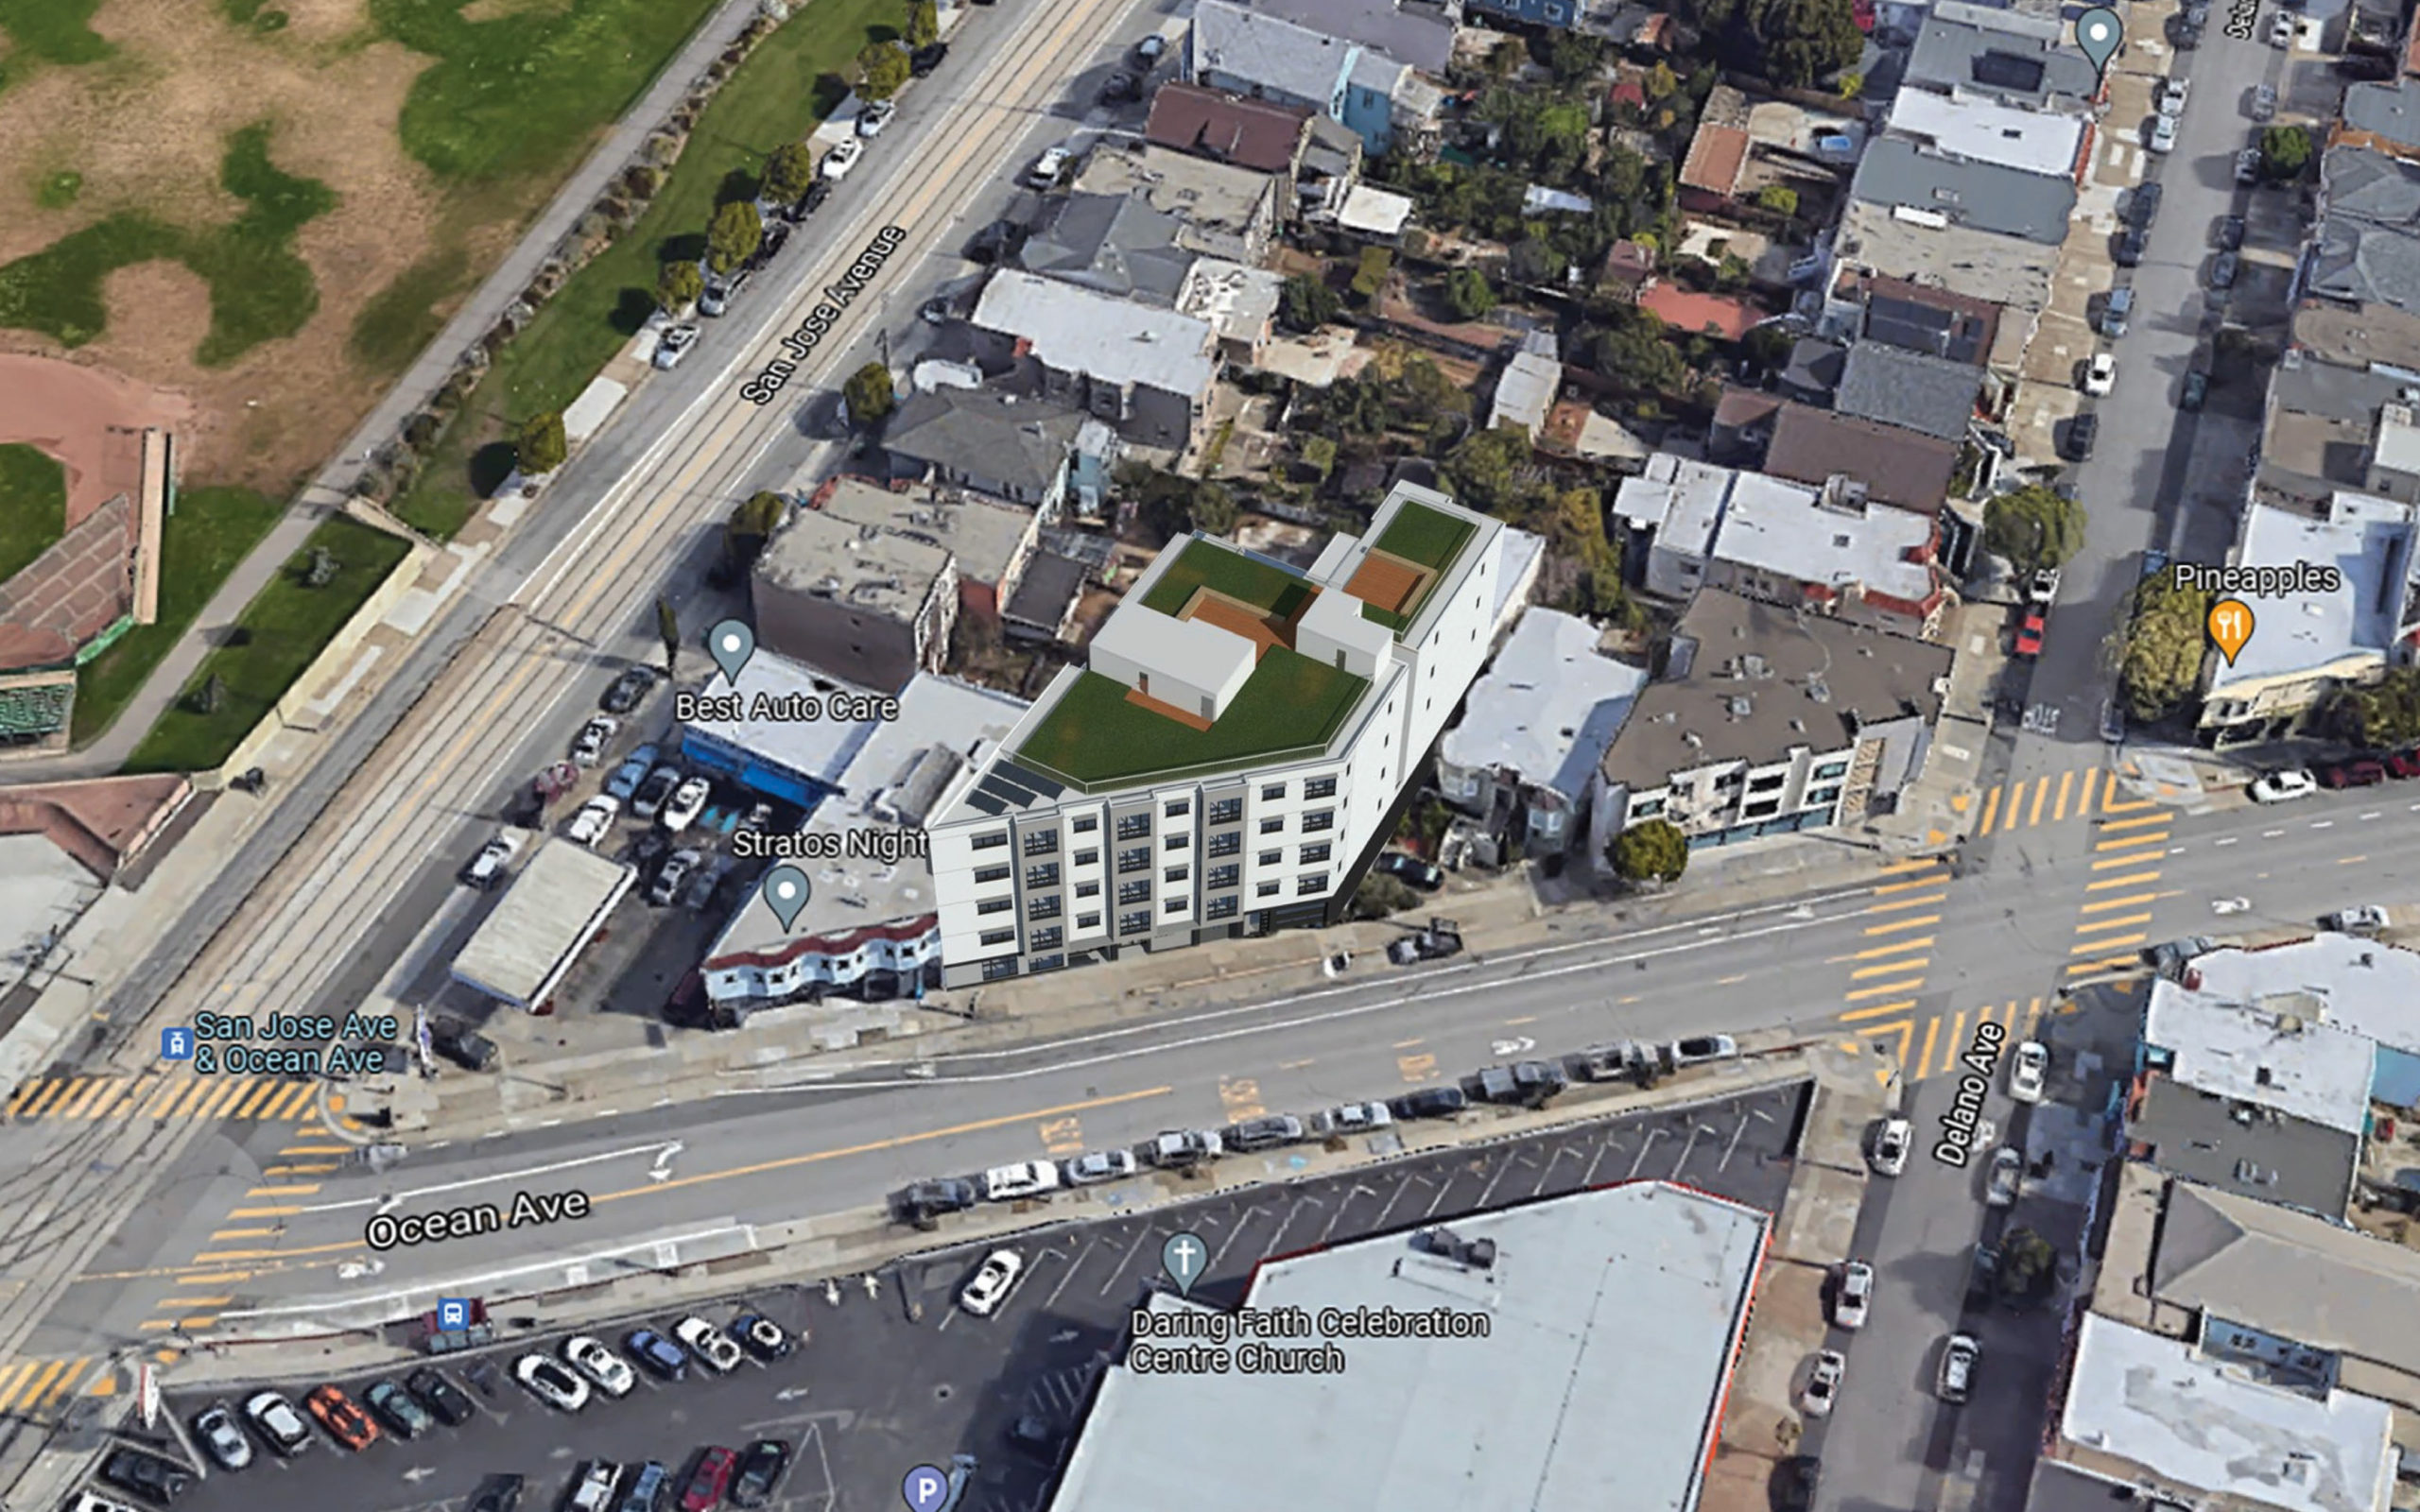 Aerial view of 350 Ocean Avenue, rendering by Schaub Li Architects